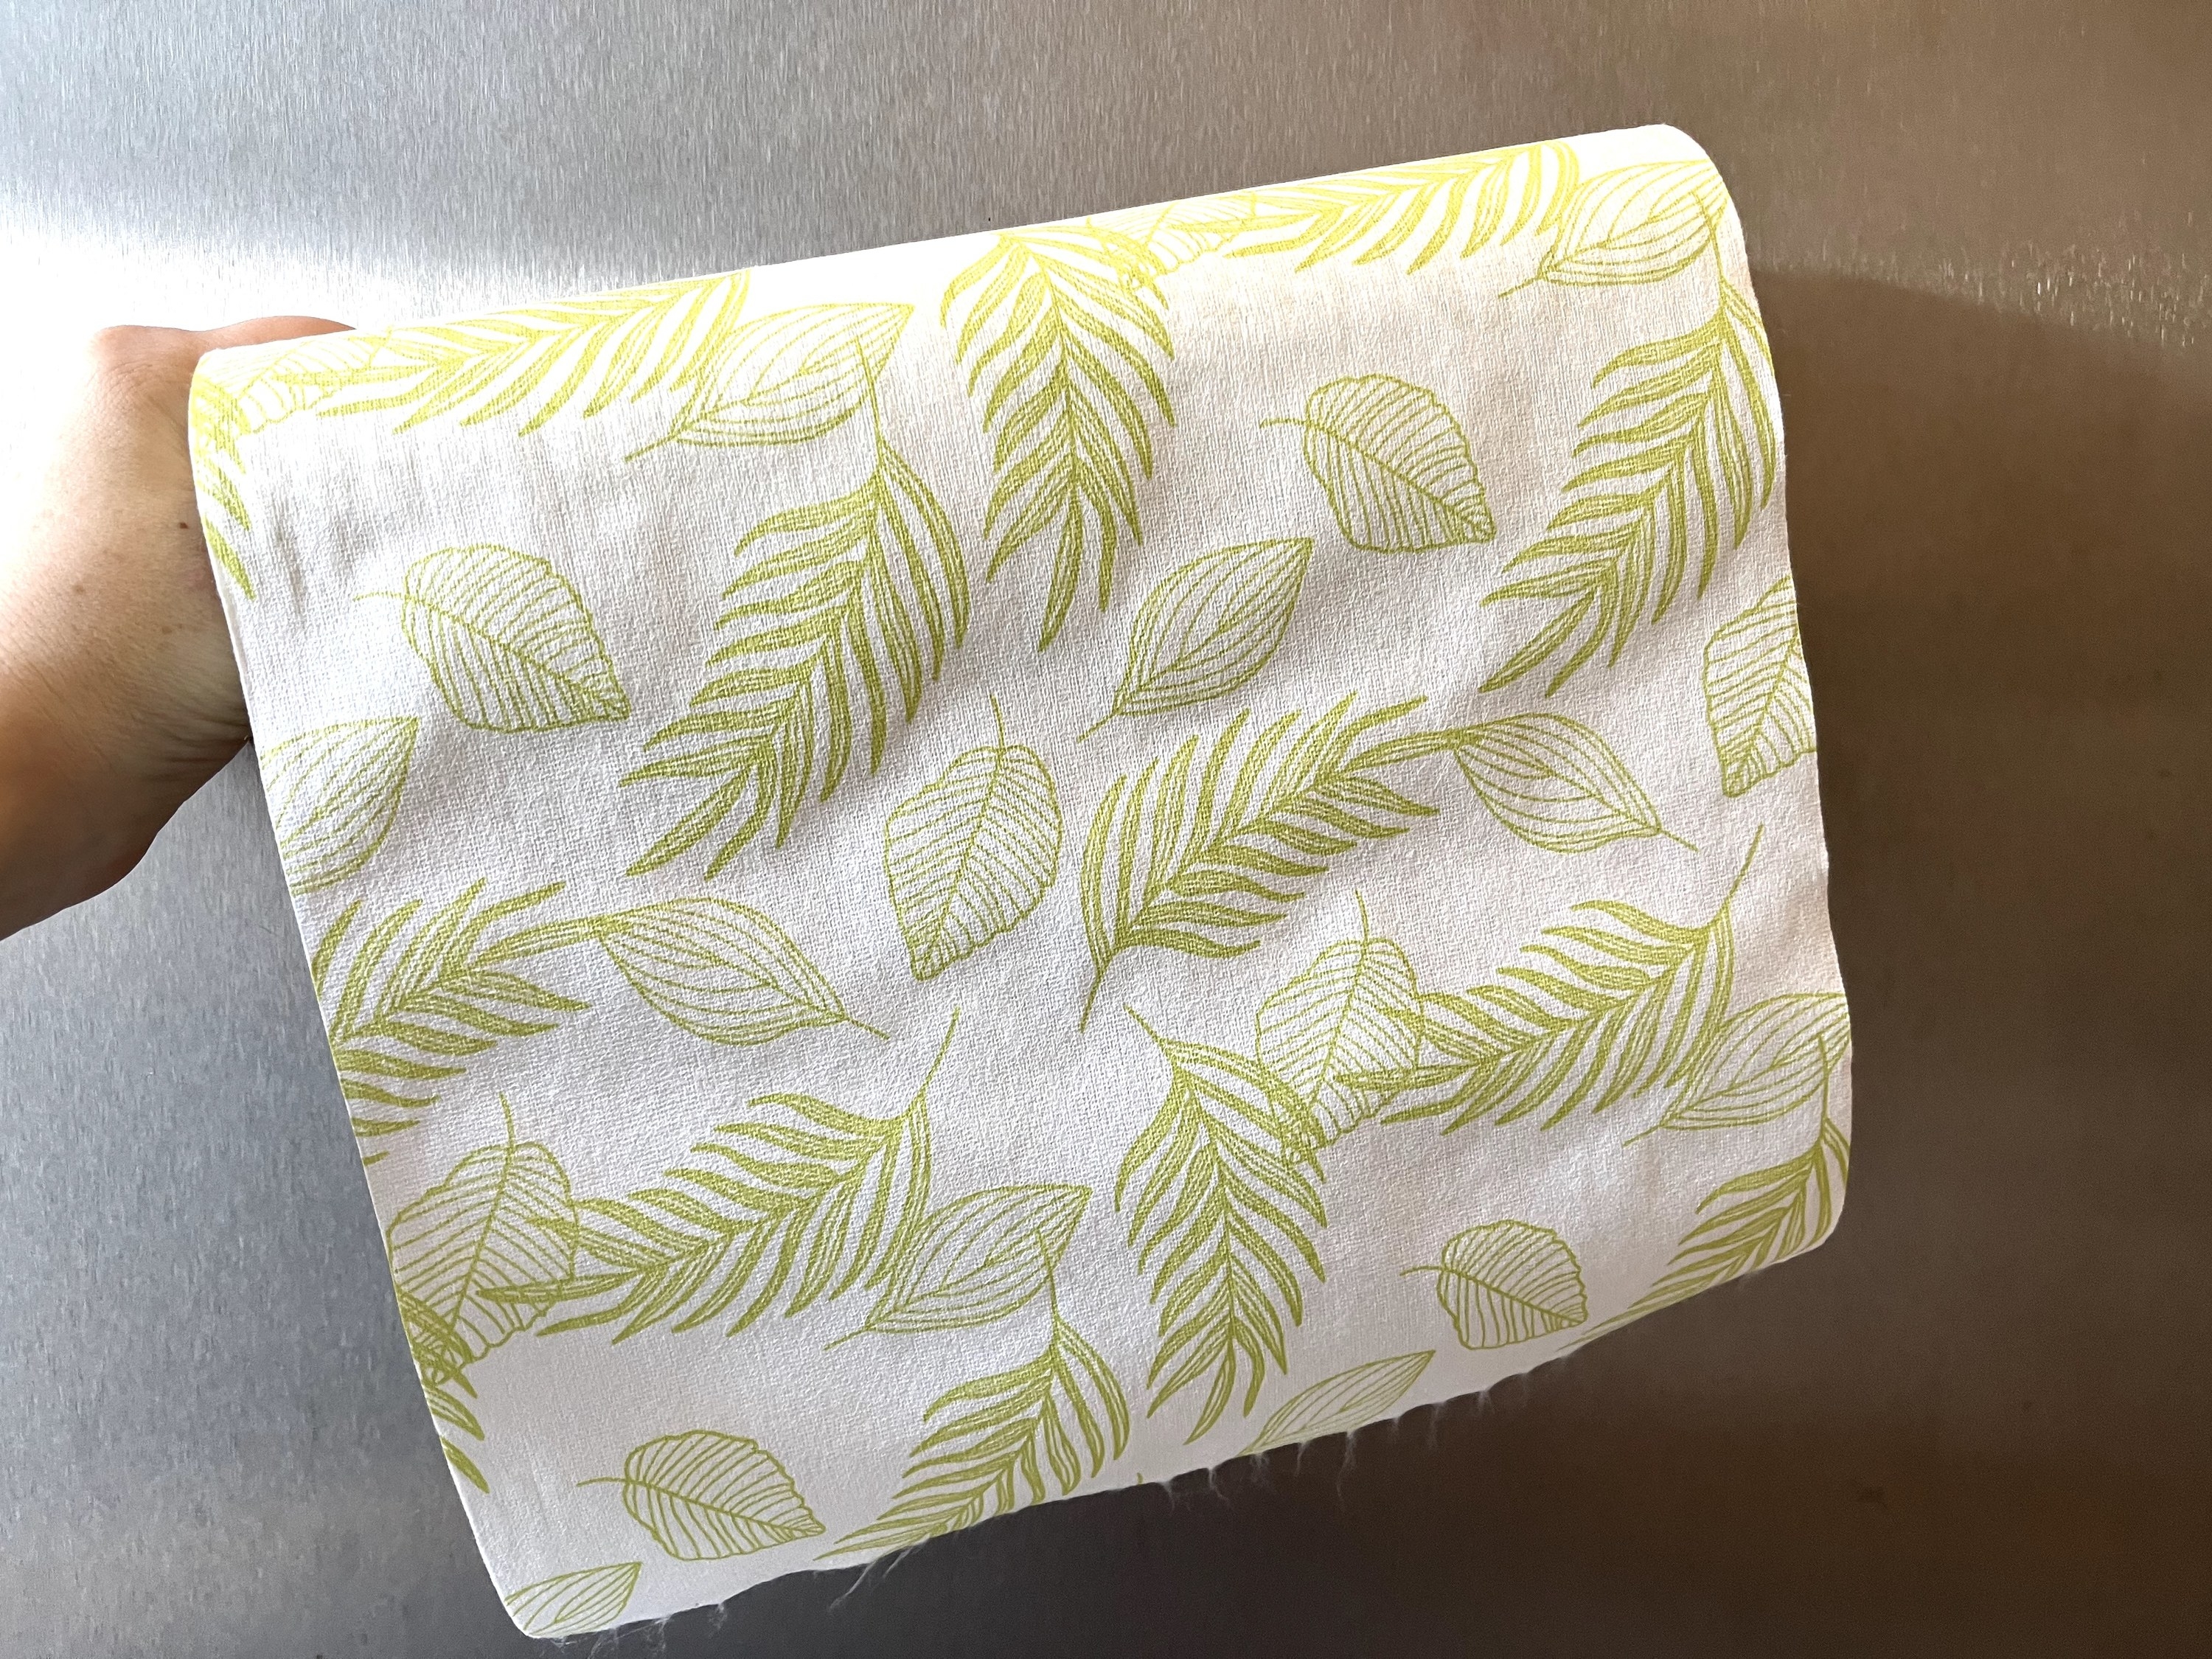 a cloth paper towel with a leaf print